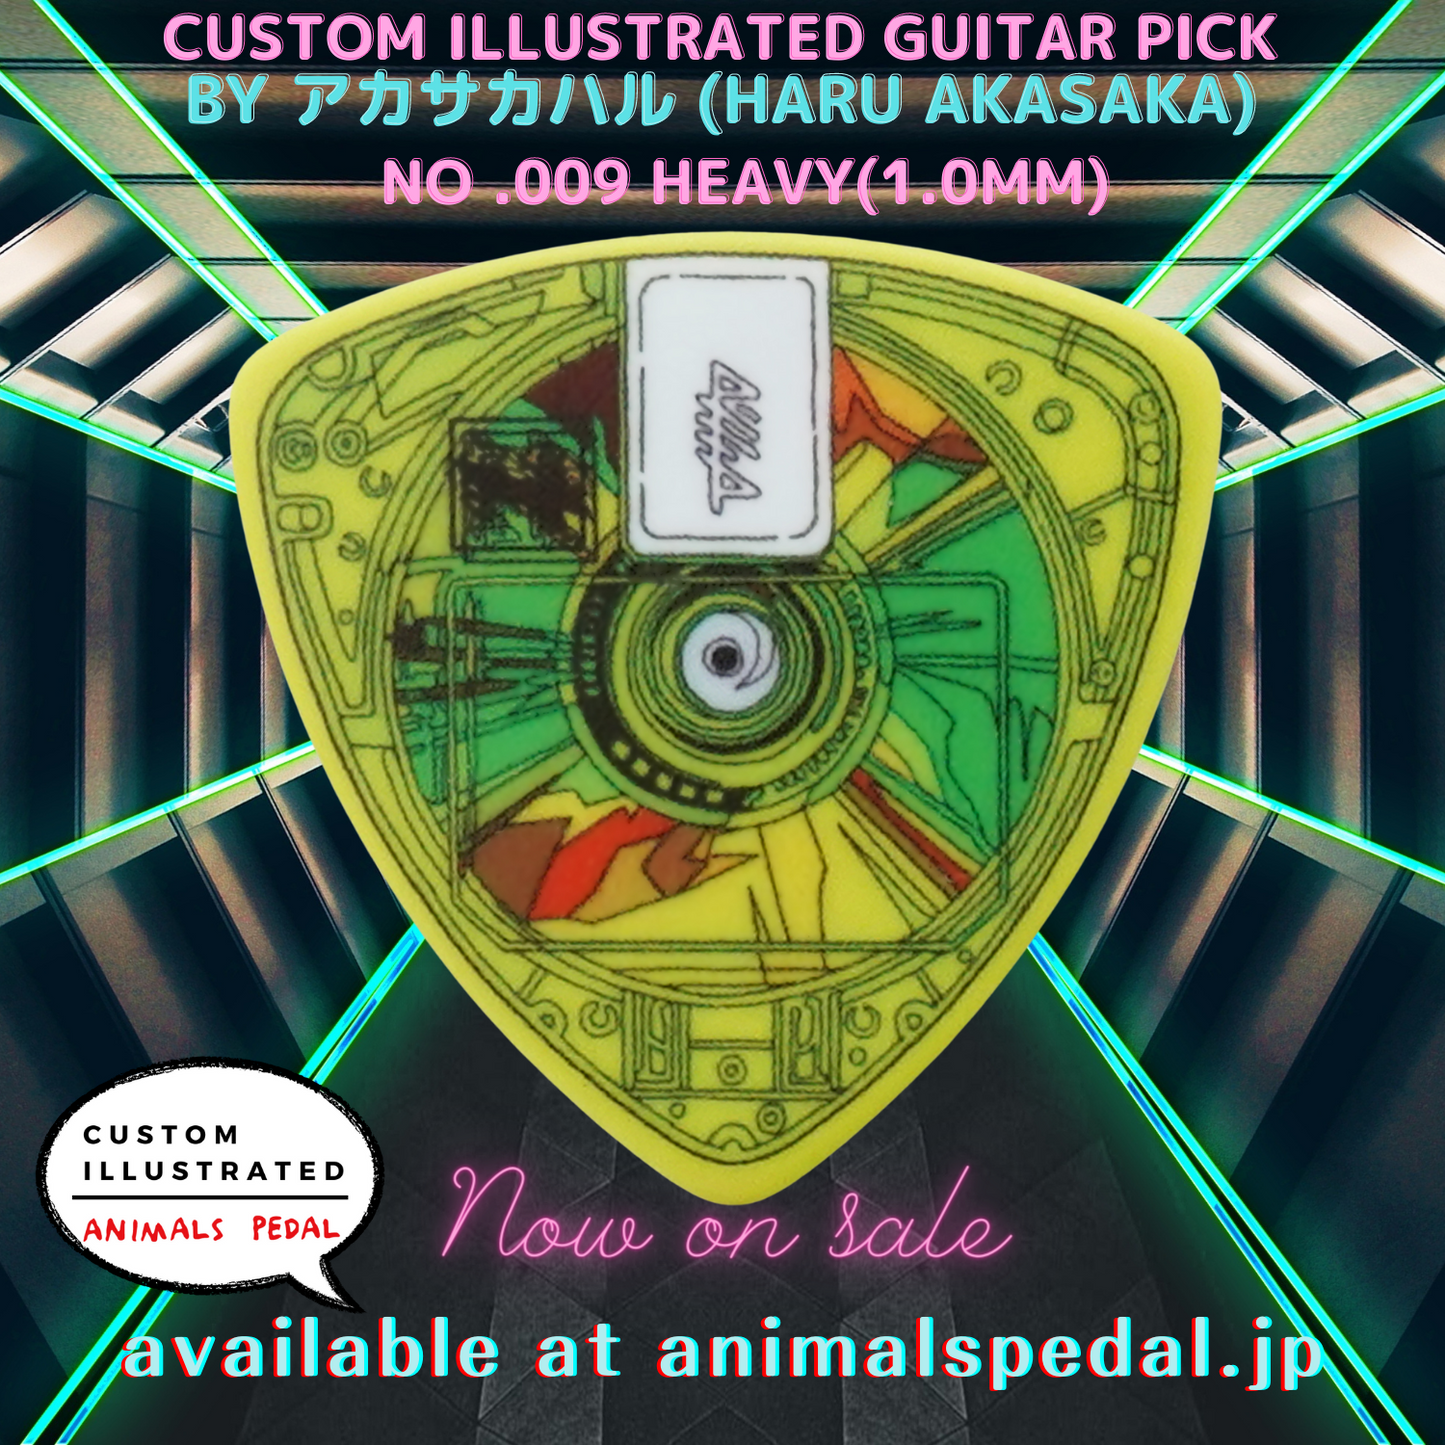 Animals Pedal Custom Illustrated Pick by アカサカハル